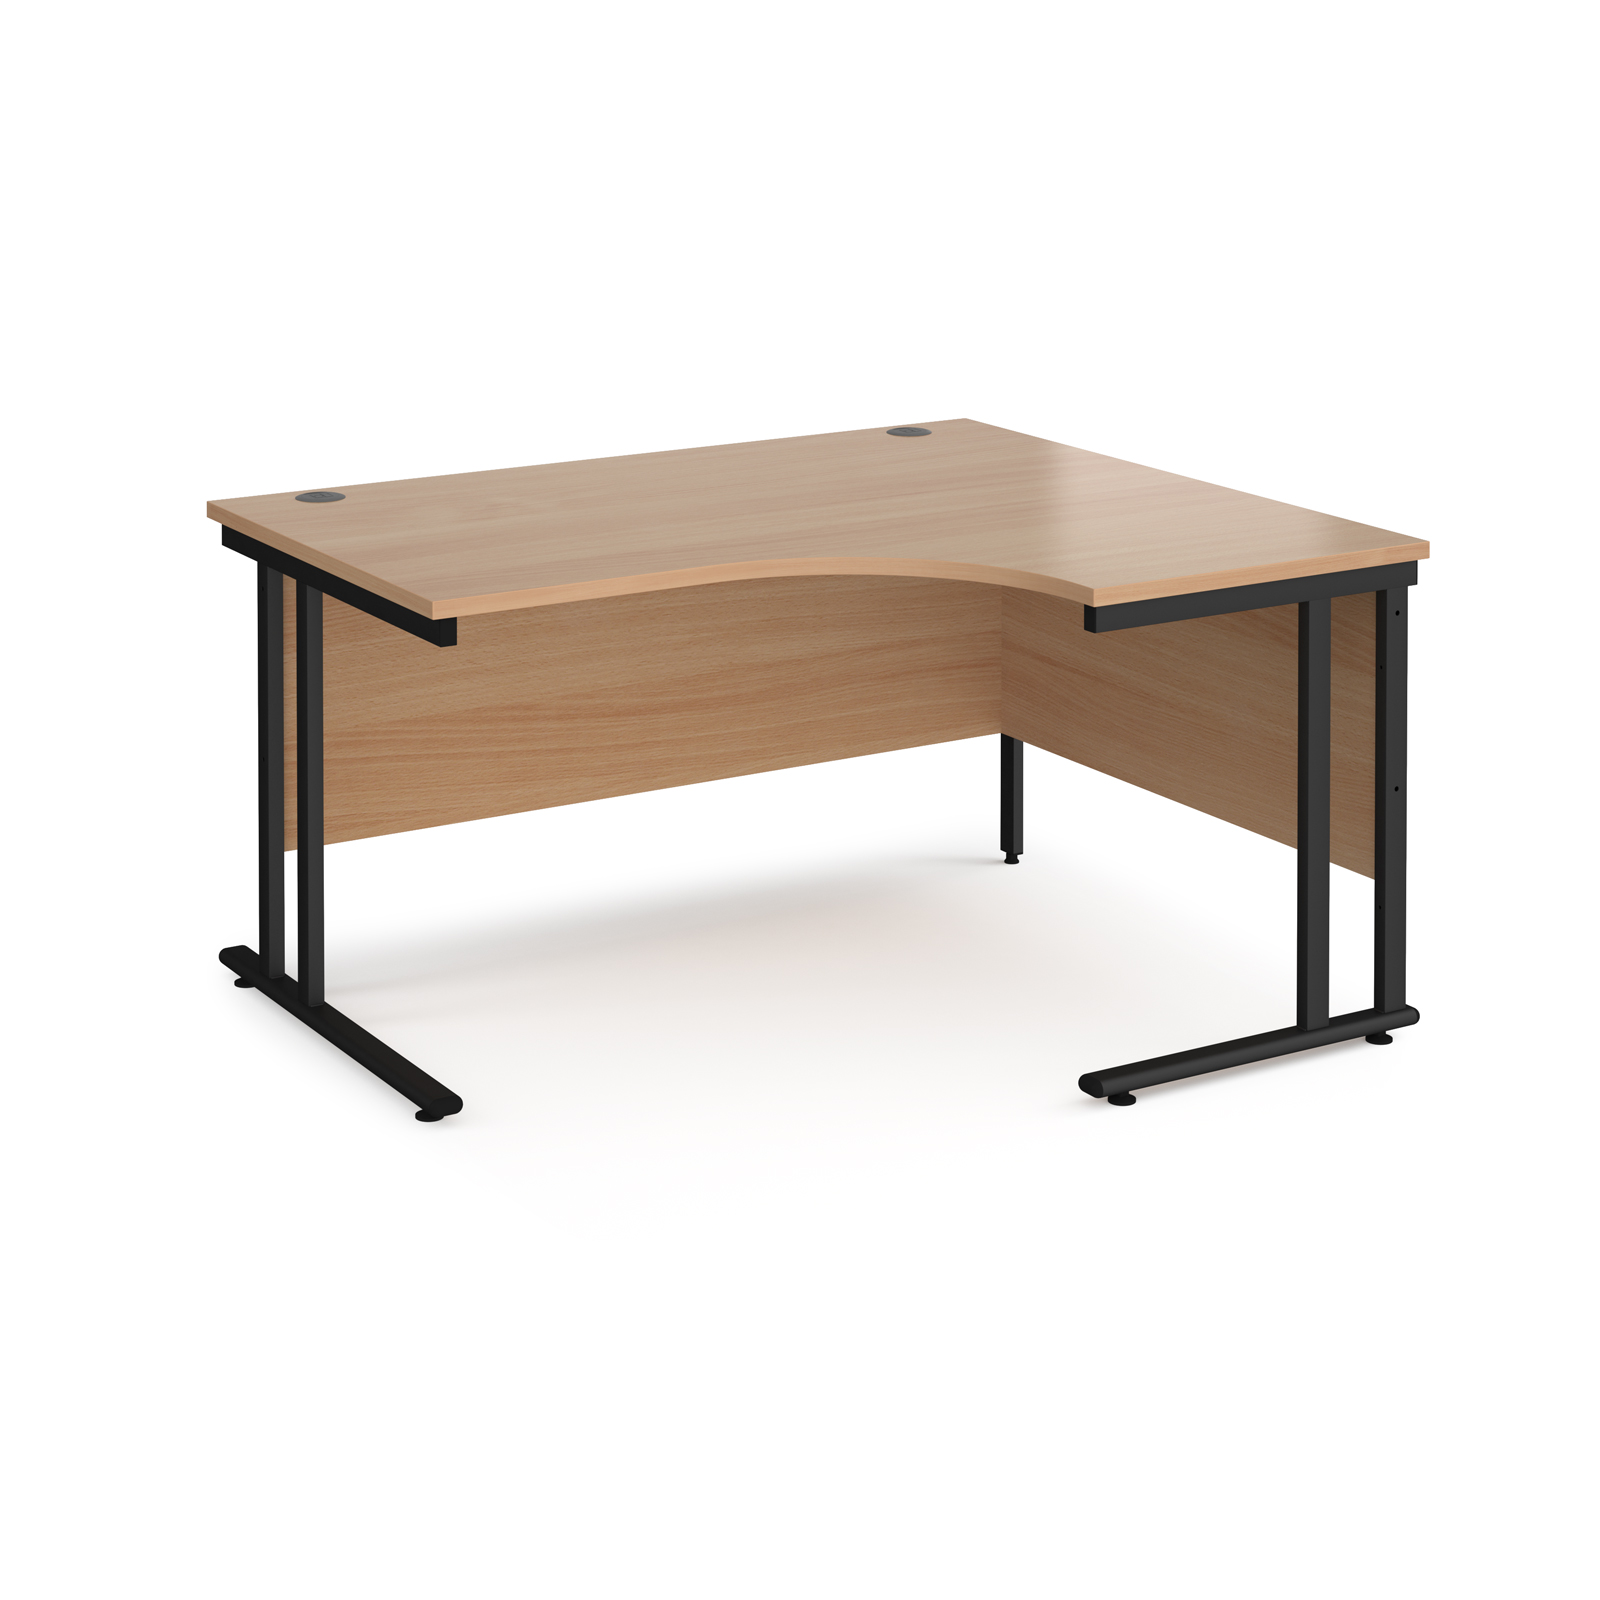 Maestro 25 right hand ergonomic desk 1400mm wide - black cantilever leg frame, beech top